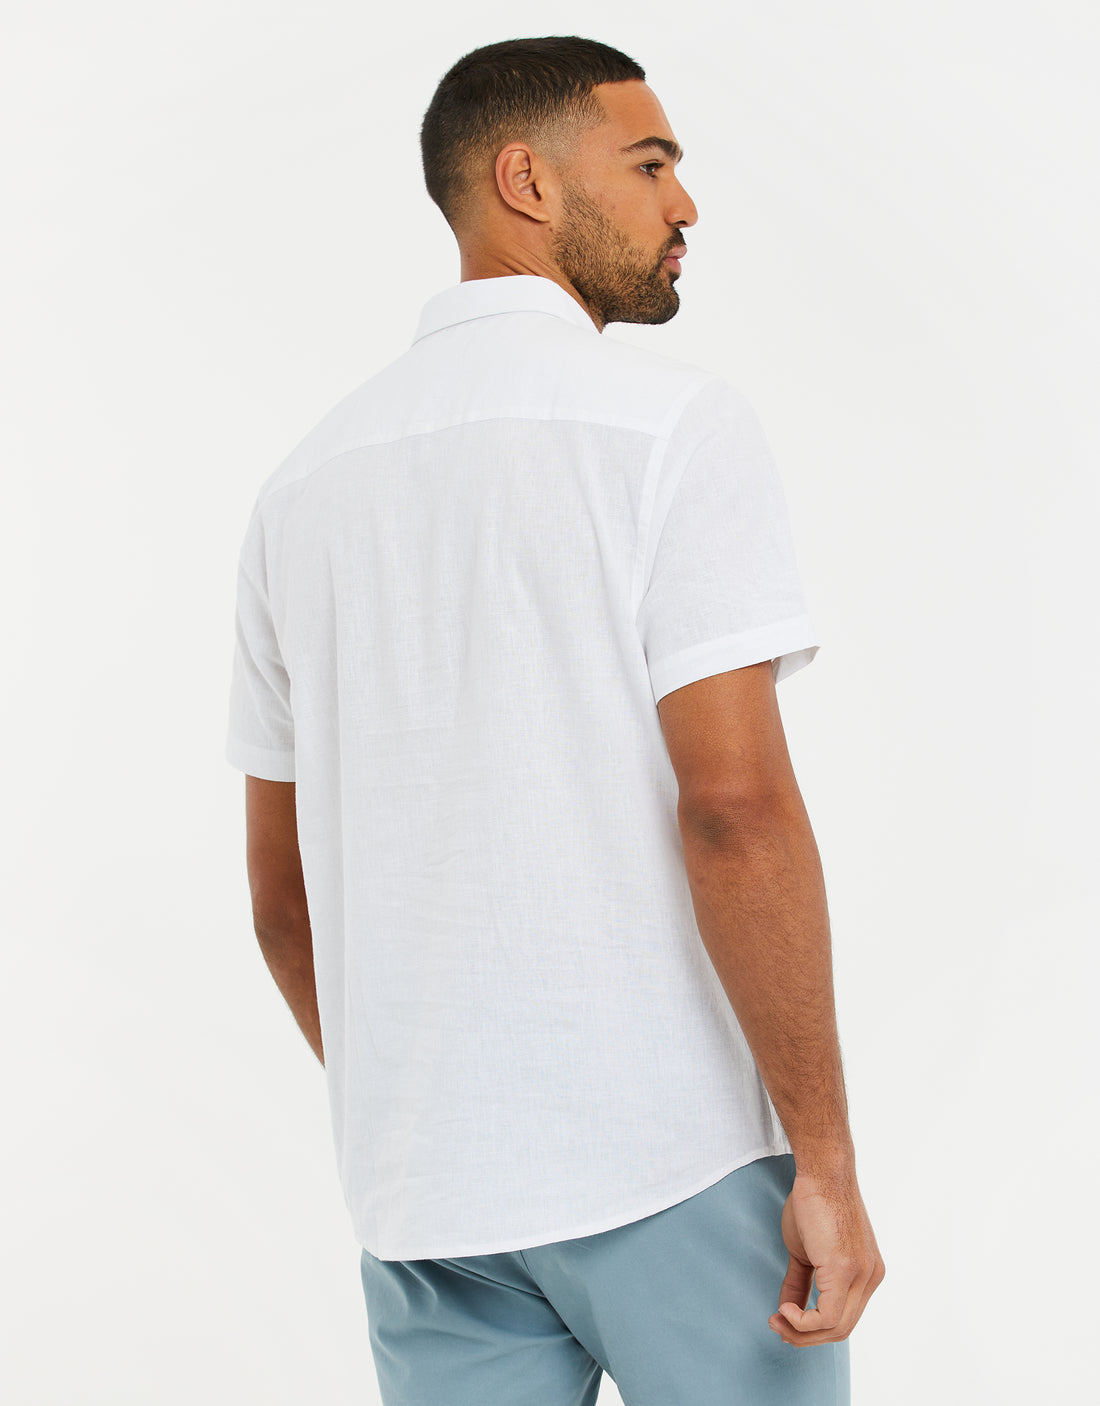 XMMSWDLA Men's Cotton Linen Short Sleeve Shirts Lightweight Casual